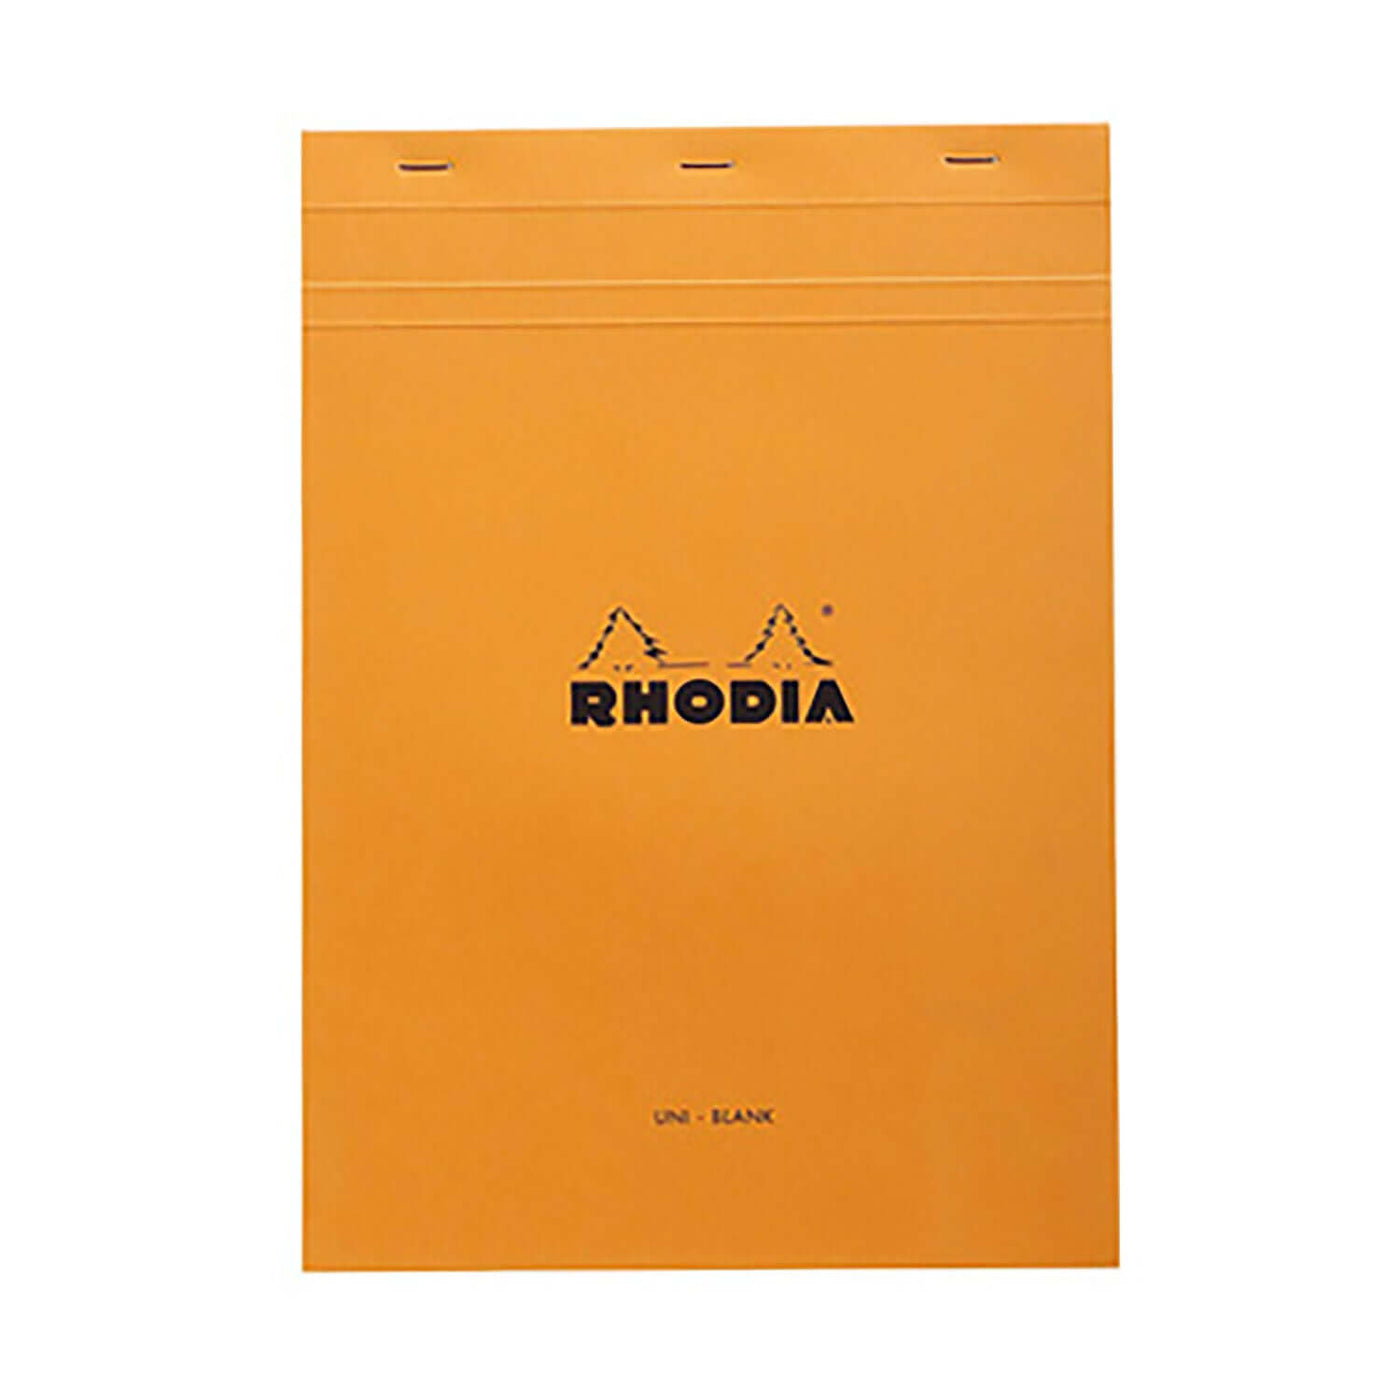 Rhodia Basics Notepad, Orange - Top Stapled 2